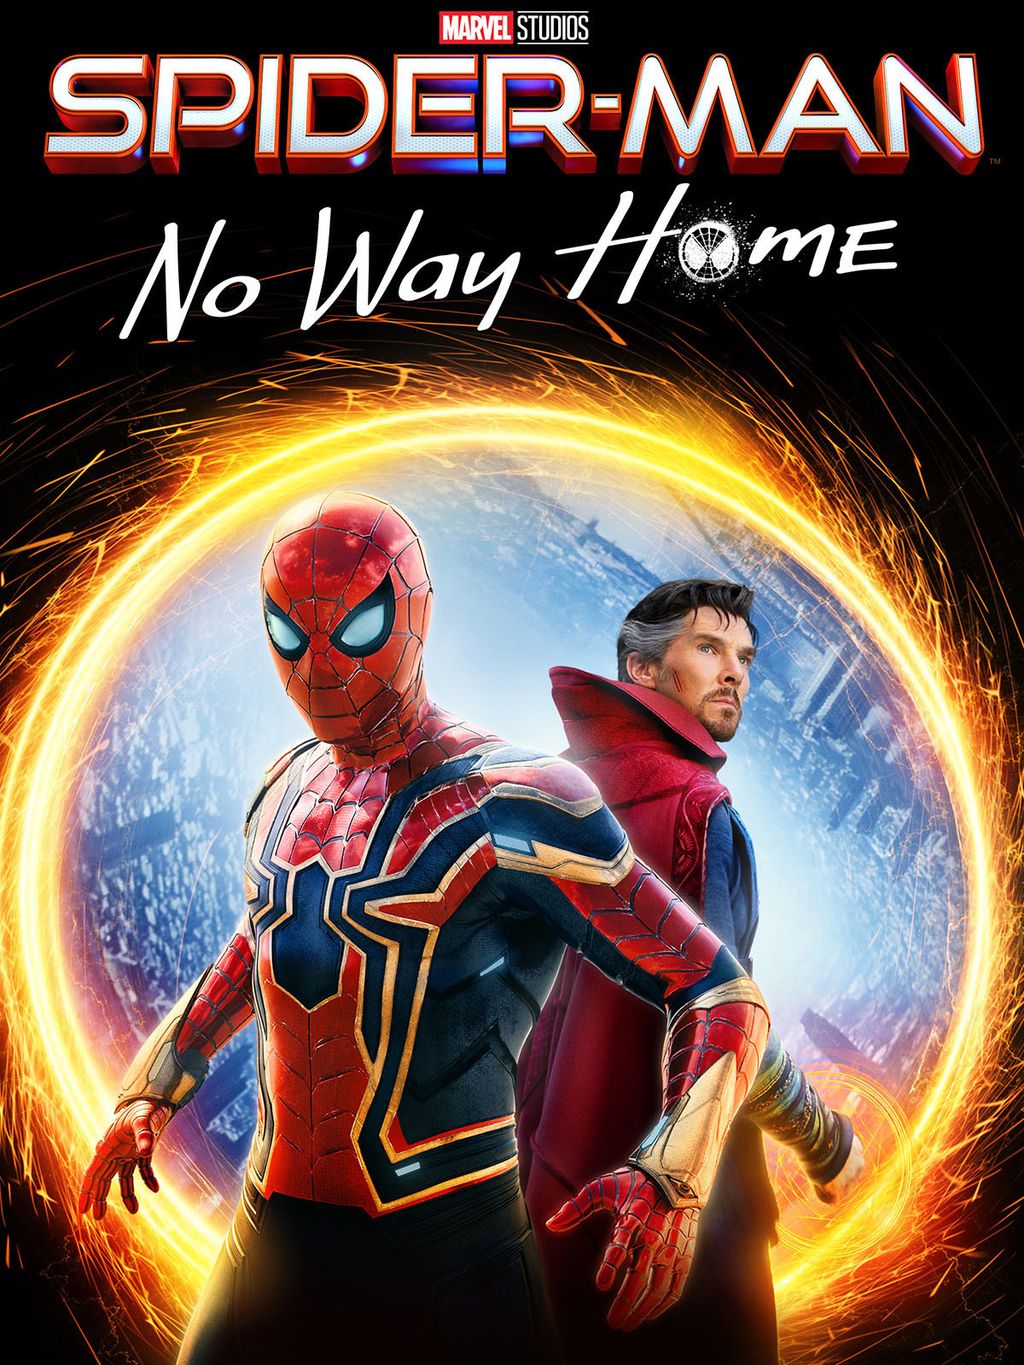 Spider-Man: no way home